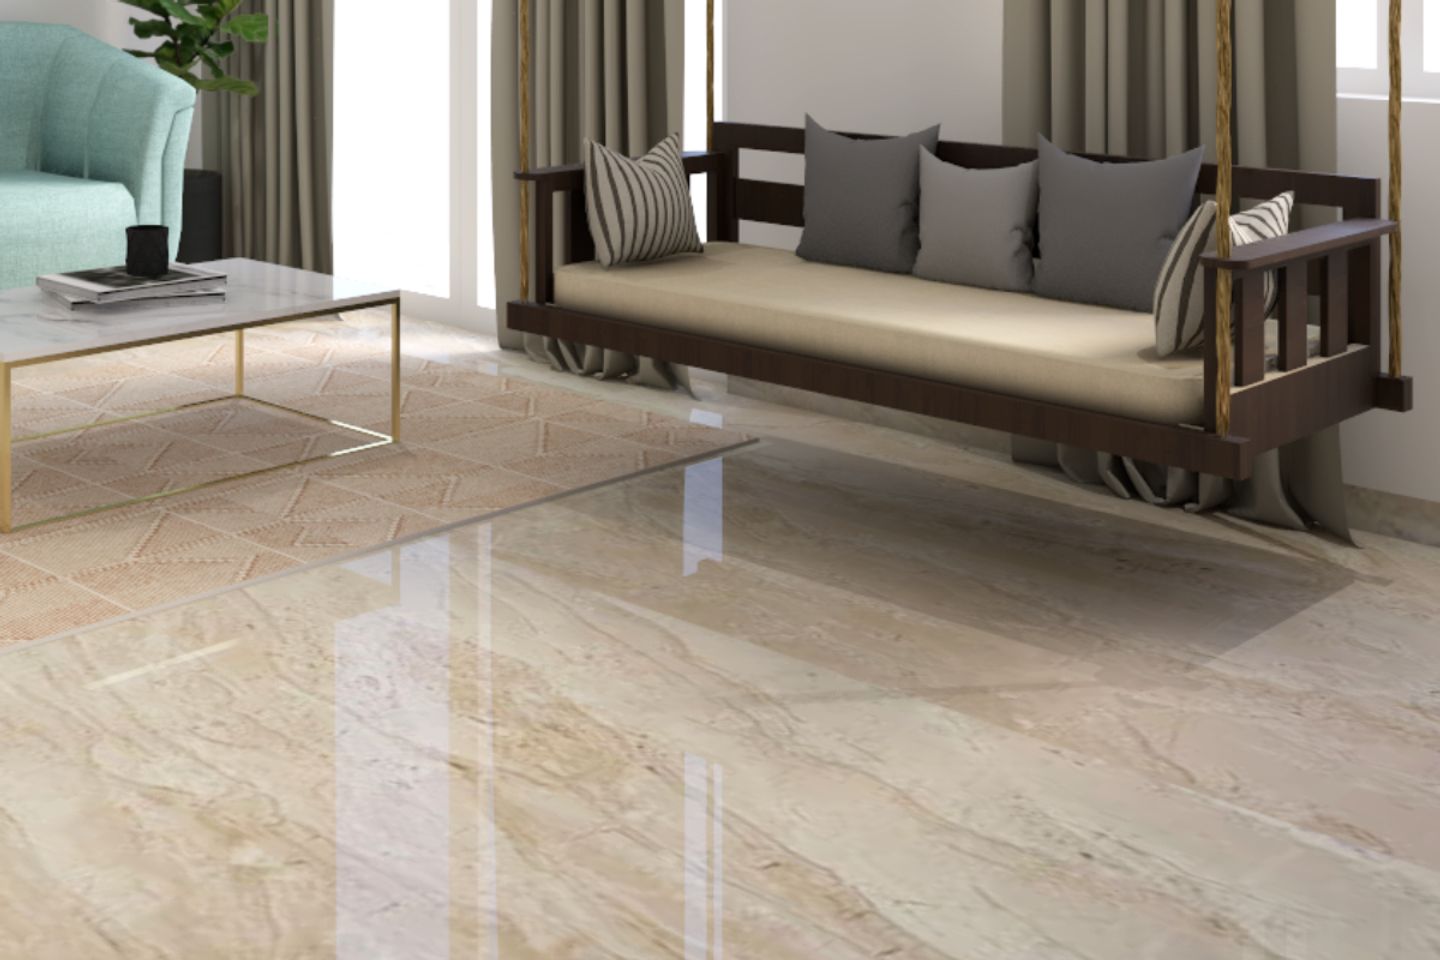 Durable Marble Floor Tiles - Livspace